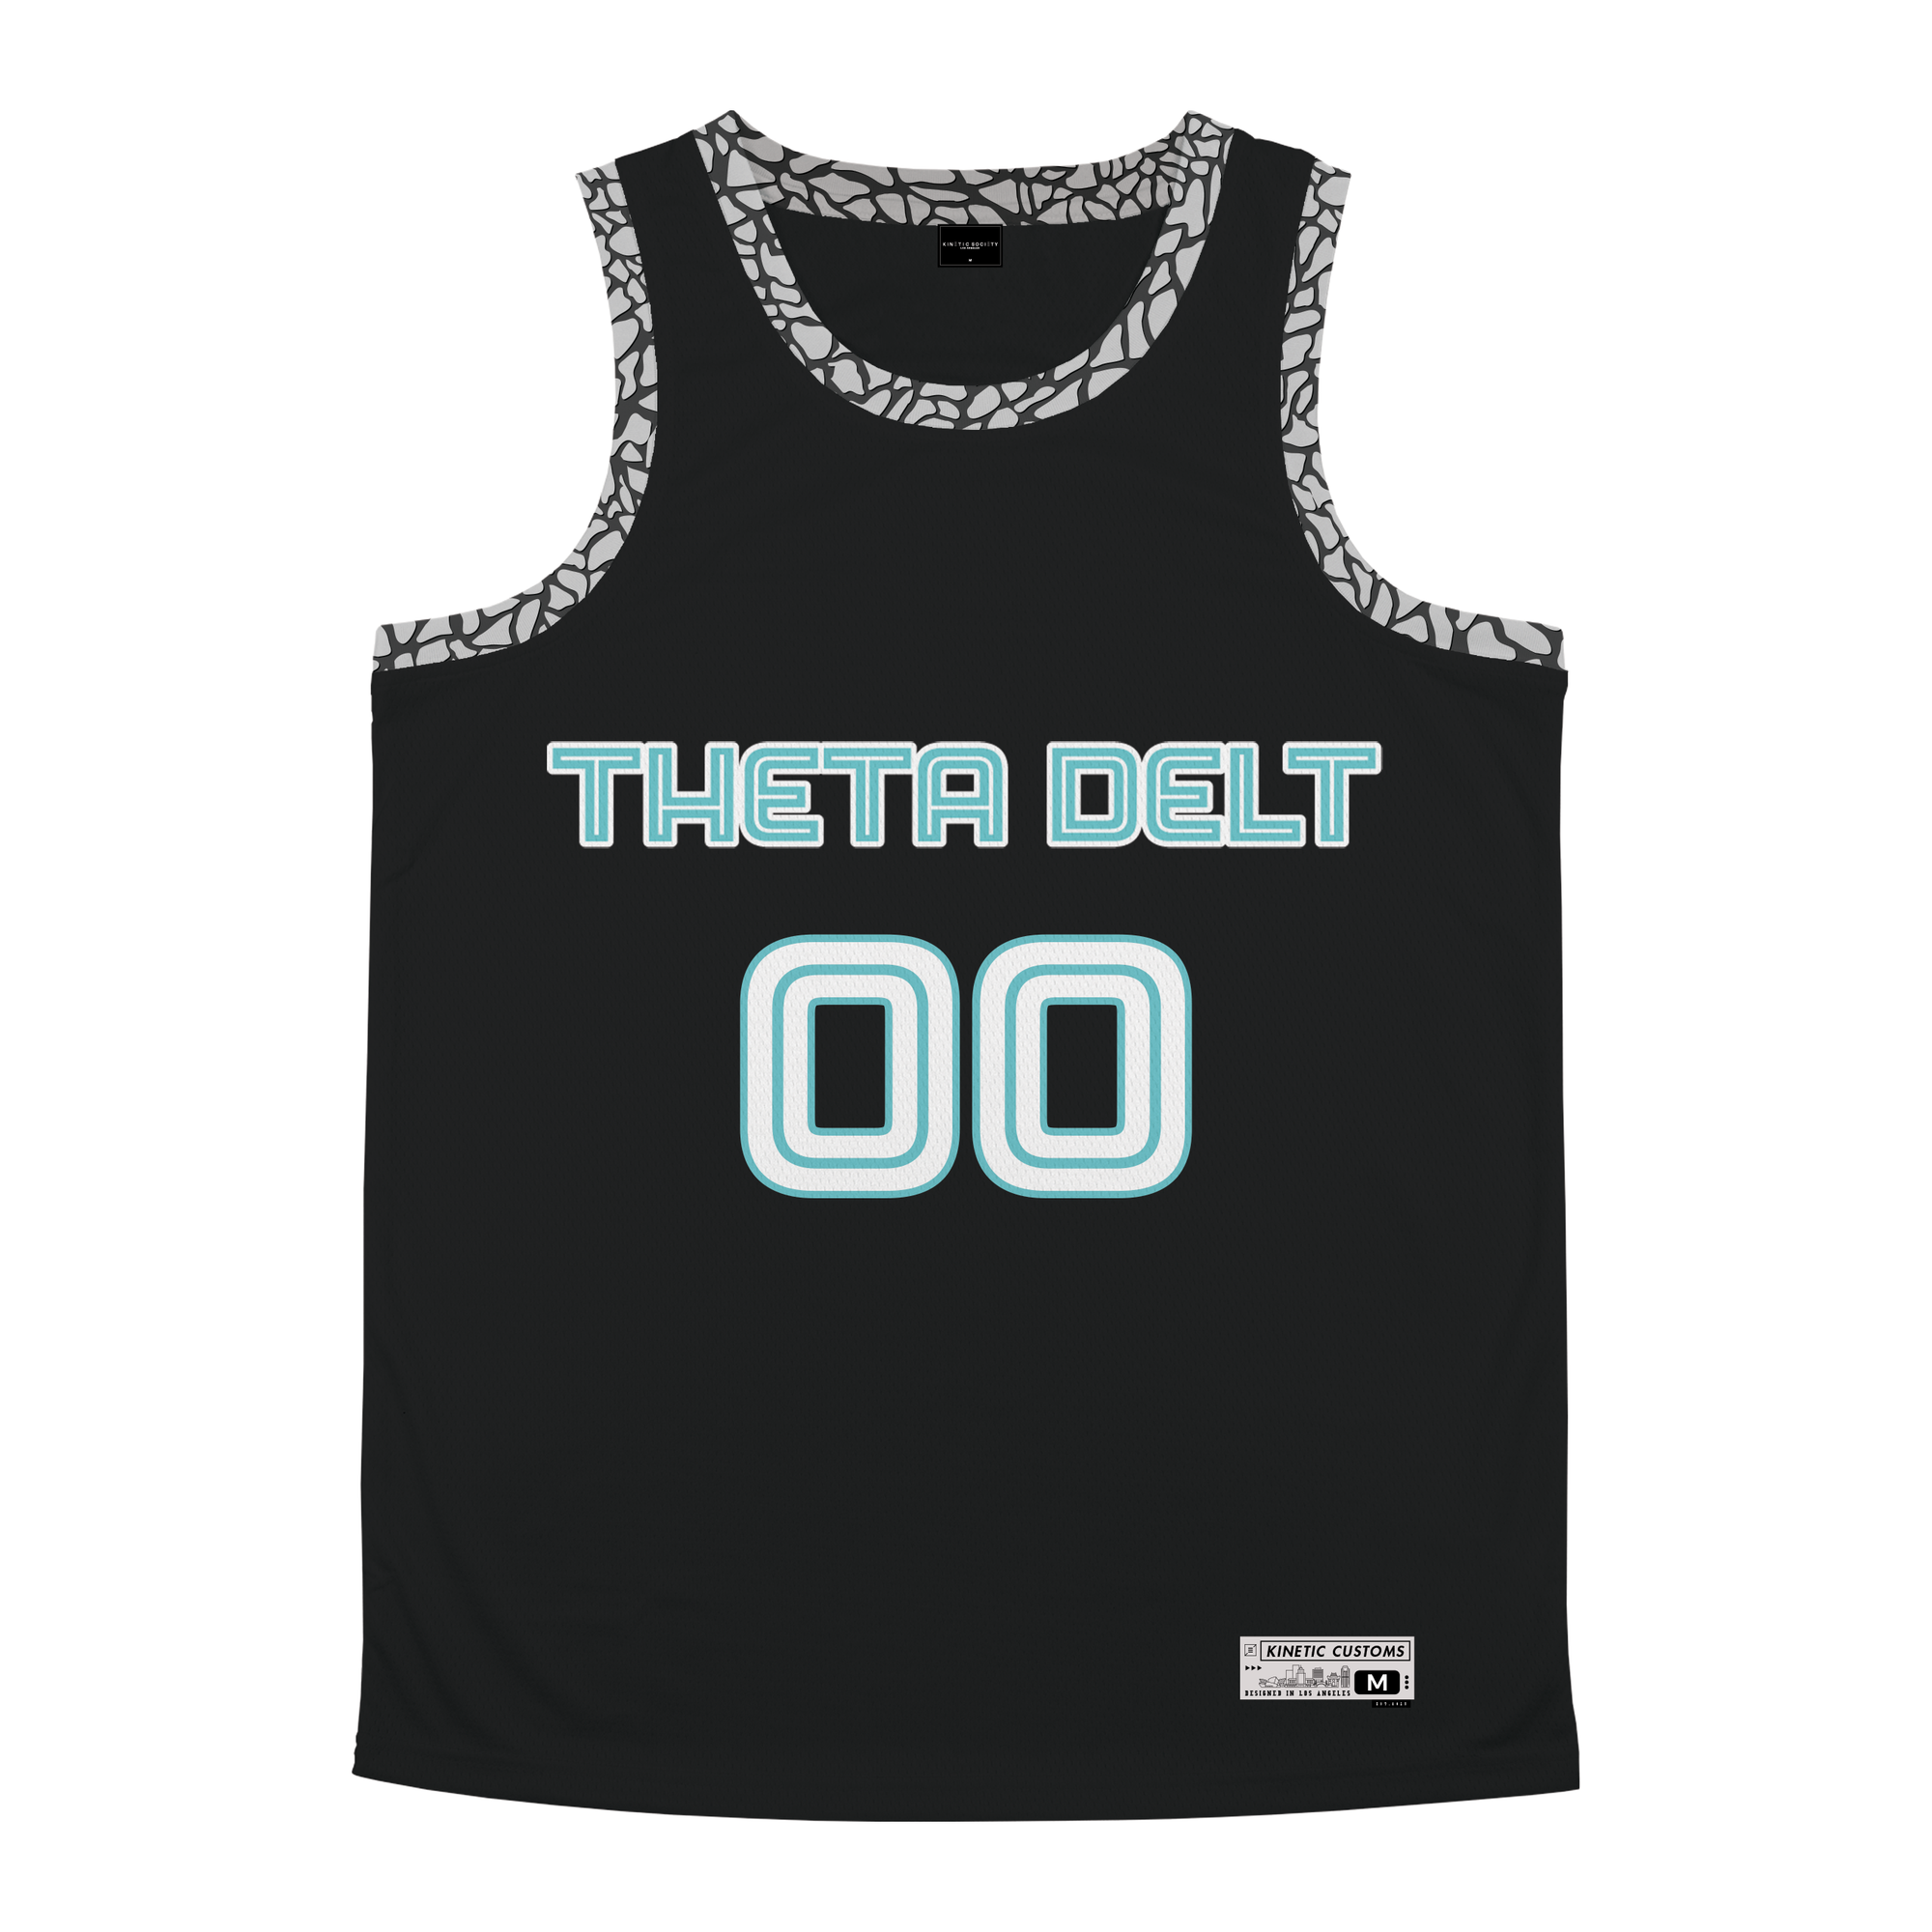 Theta Delta Chi - Cement Basketball Jersey